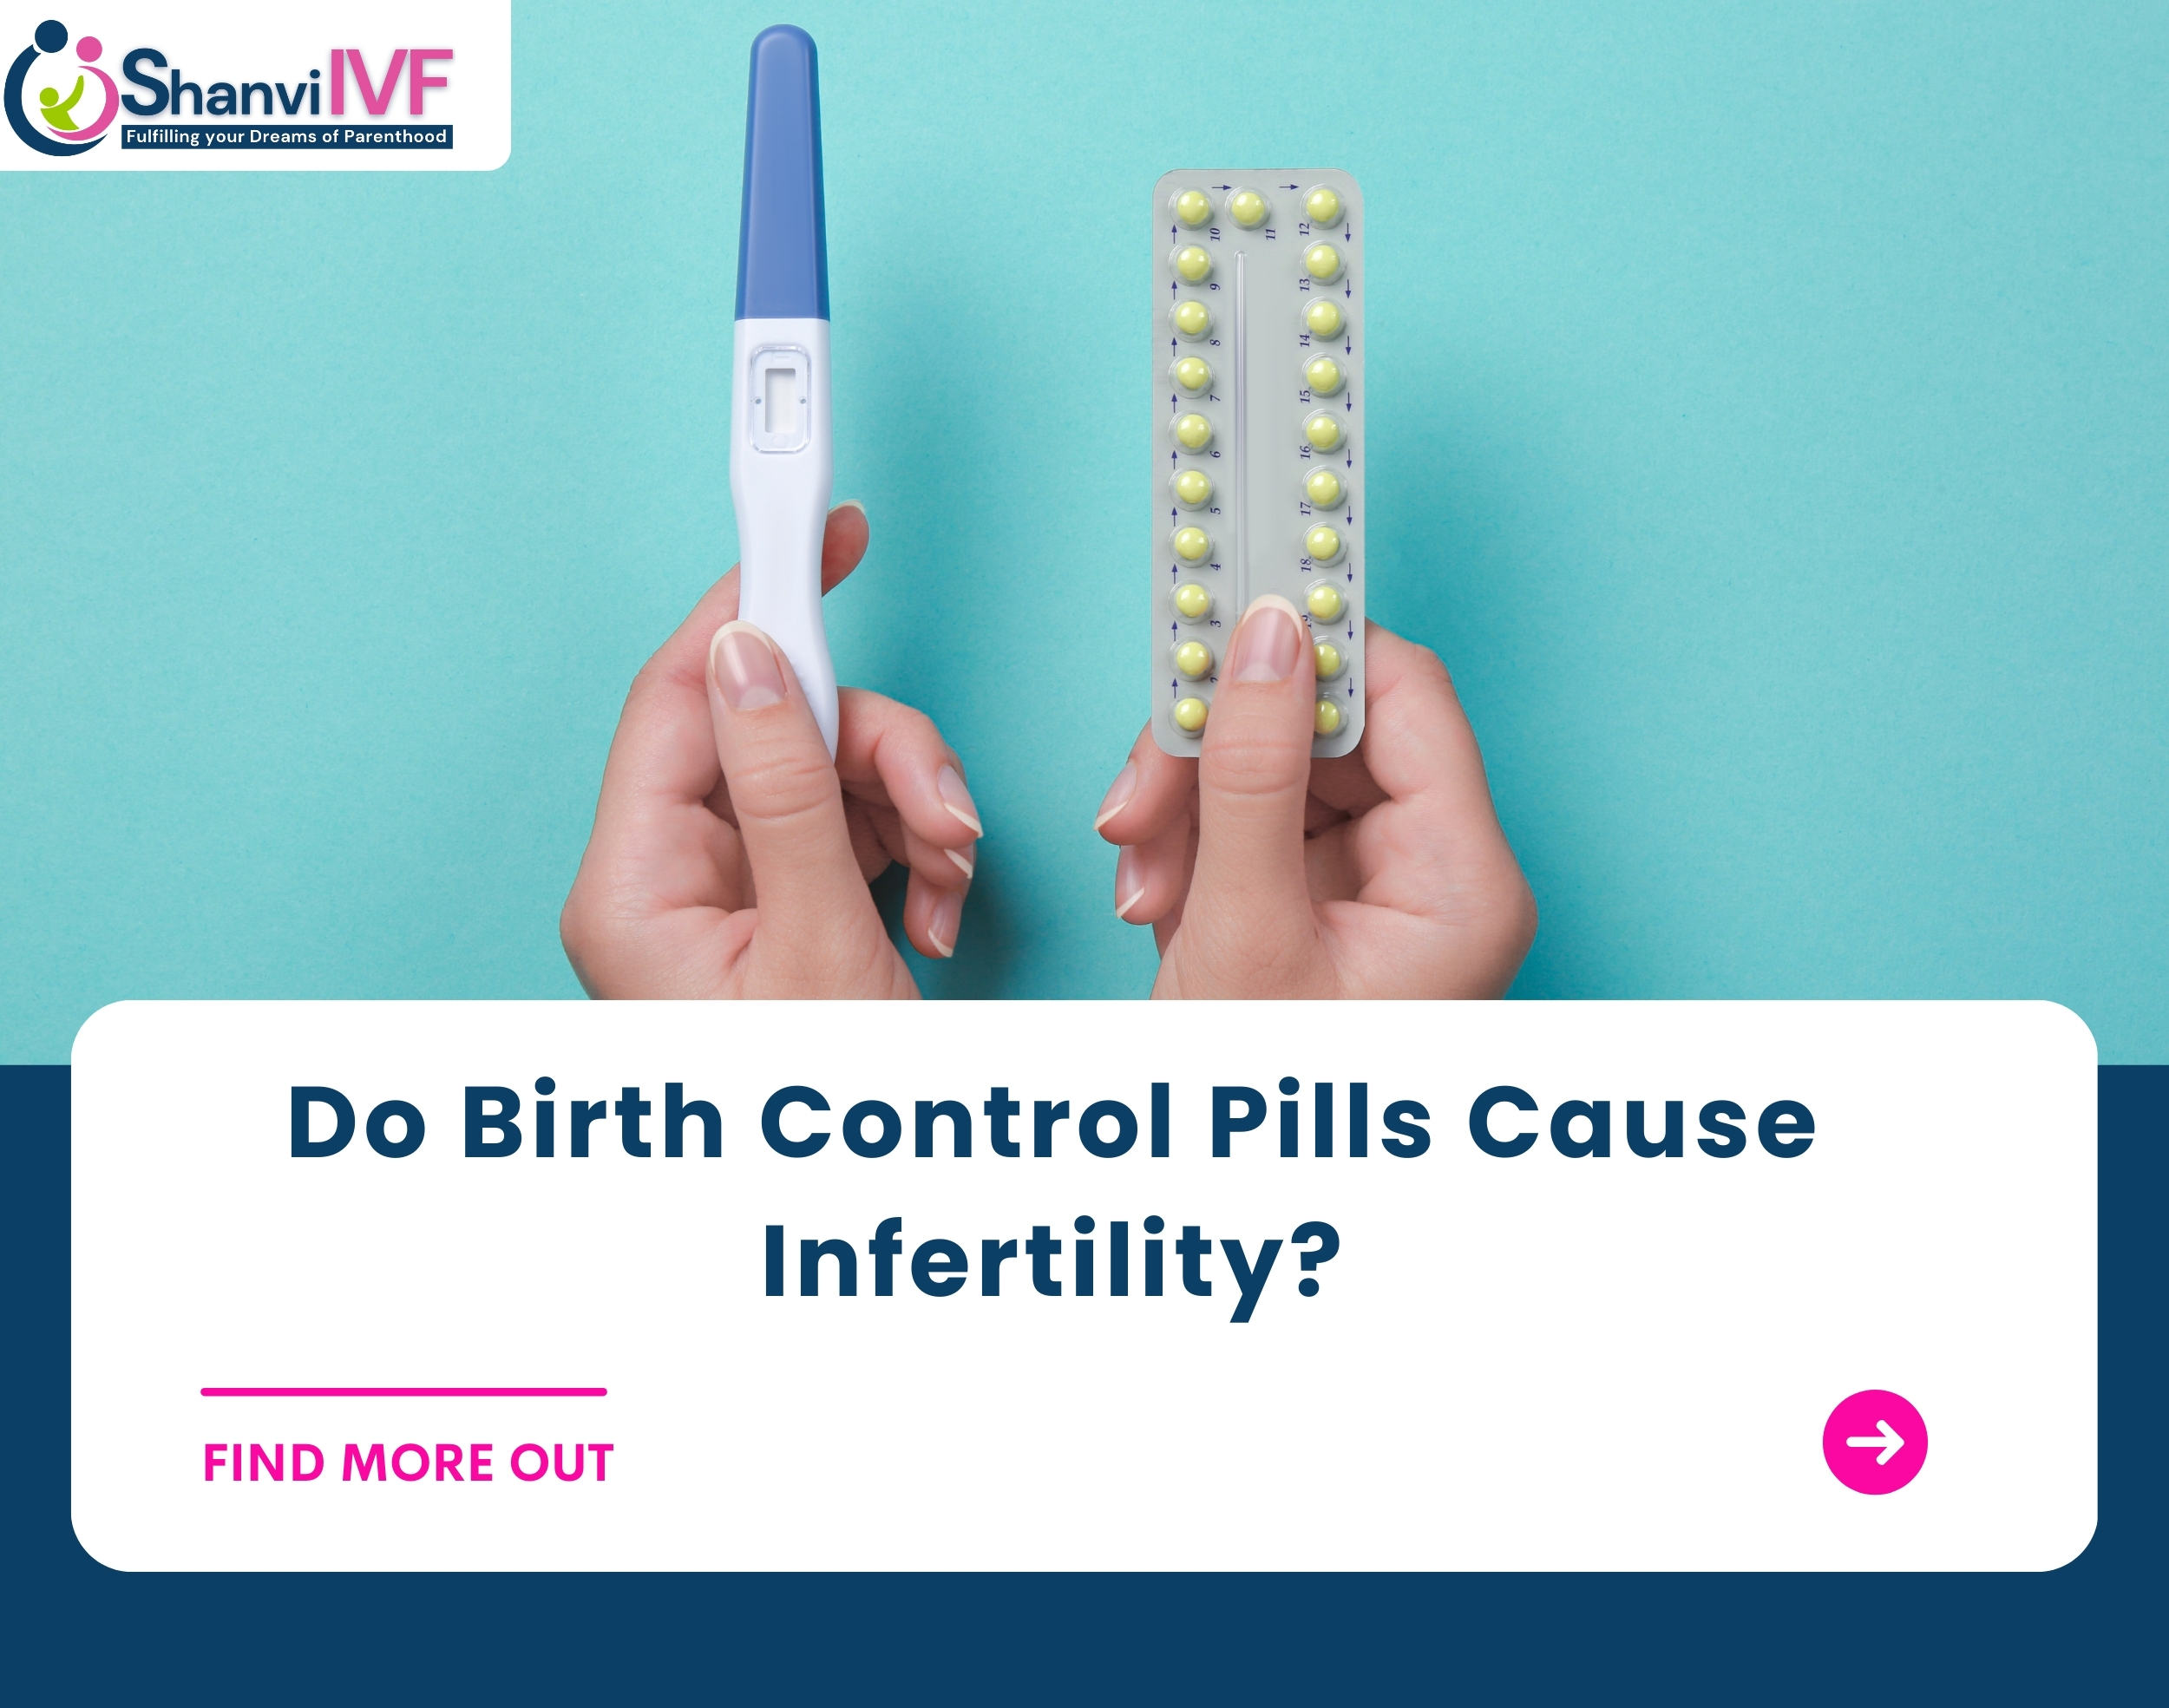 Do Birth Control Pills Cause Infertility?